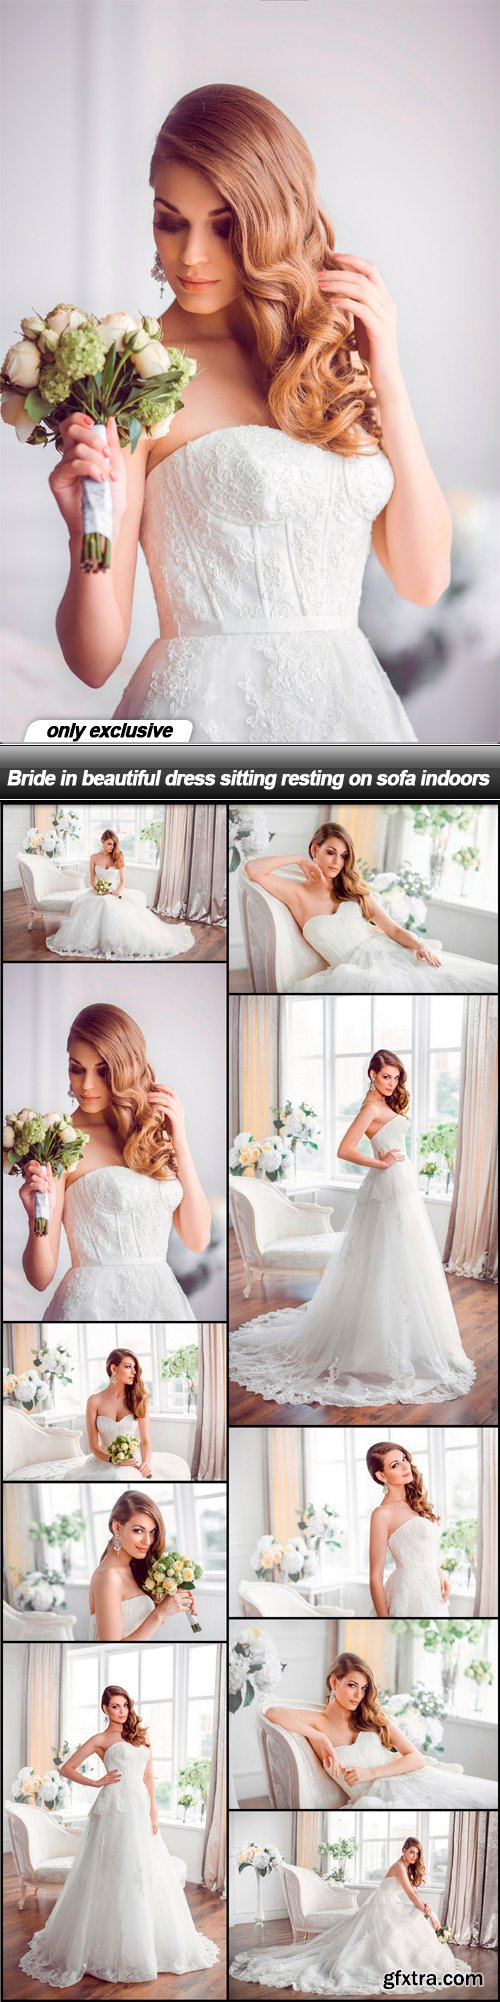 Bride in beautiful dress sitting resting on sofa indoors - 10 UHQ JPEG